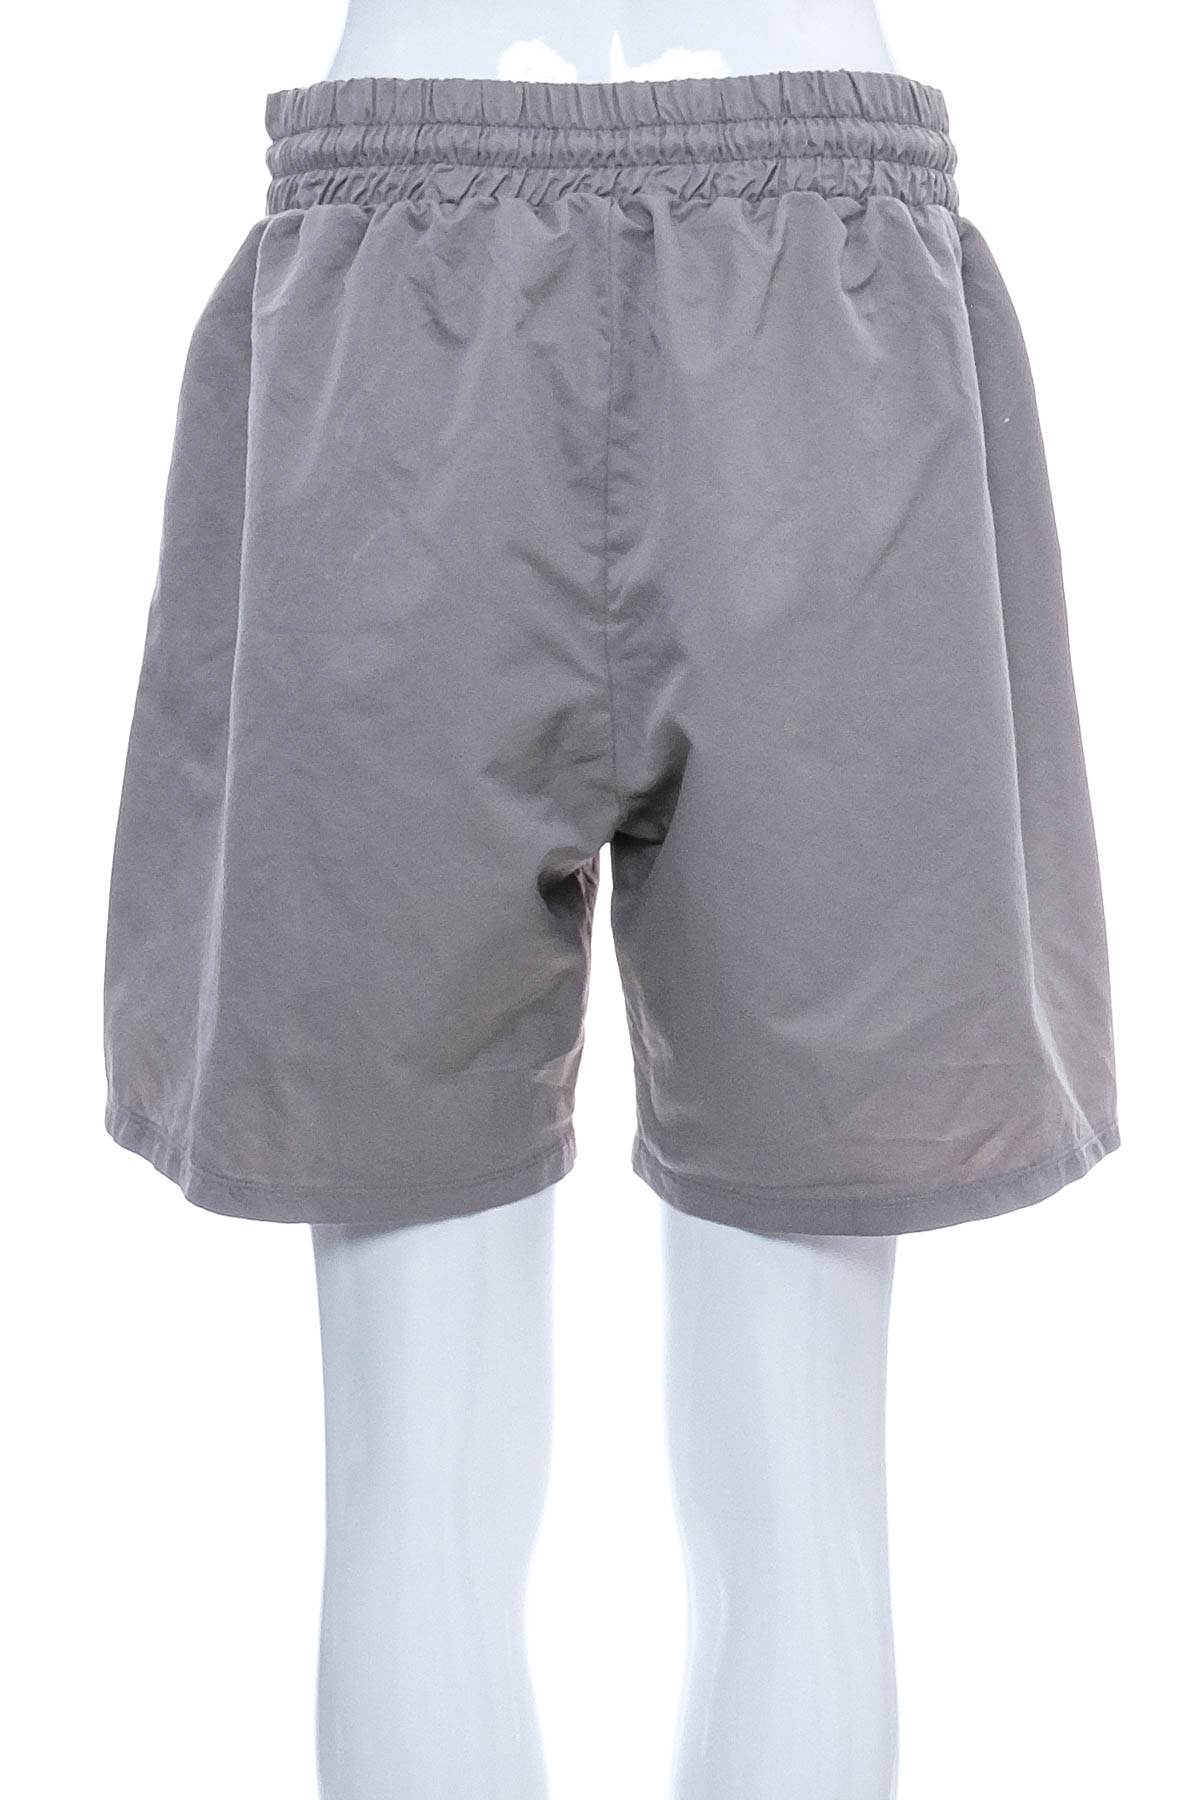 Women's shorts - Nu-in - 1